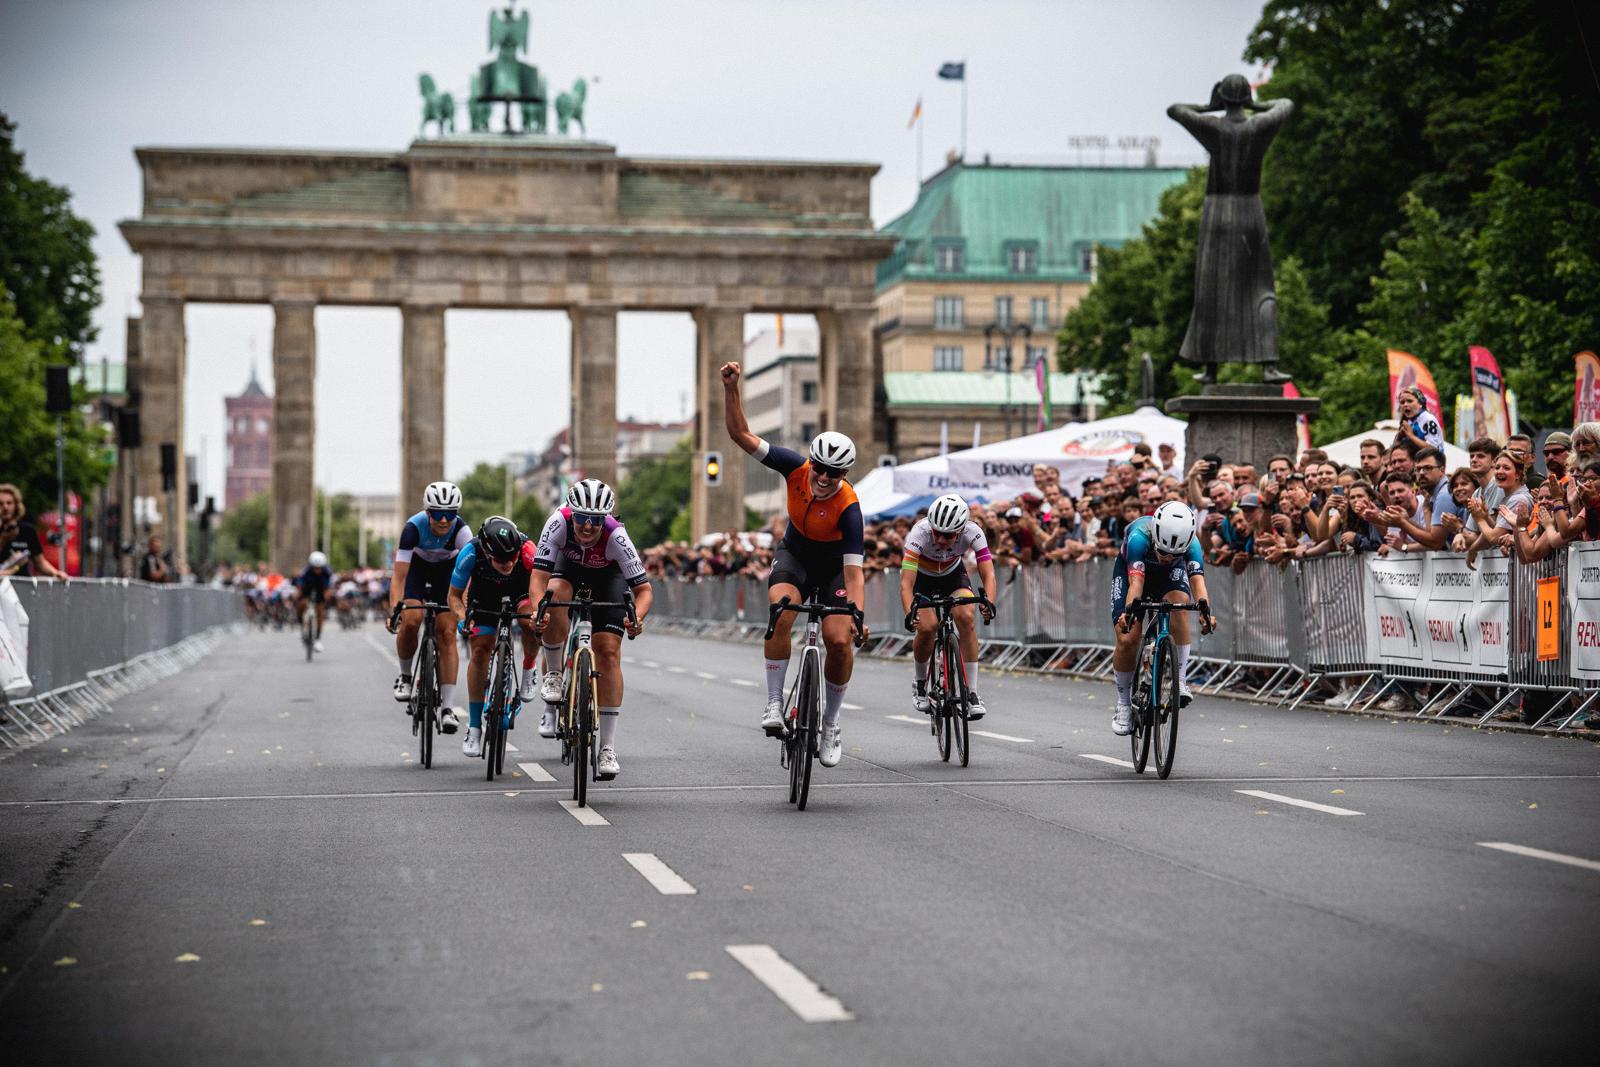 Dänin Caroline Kirk Schad gewinnt Kriterium der Tour de Berlin Feminin